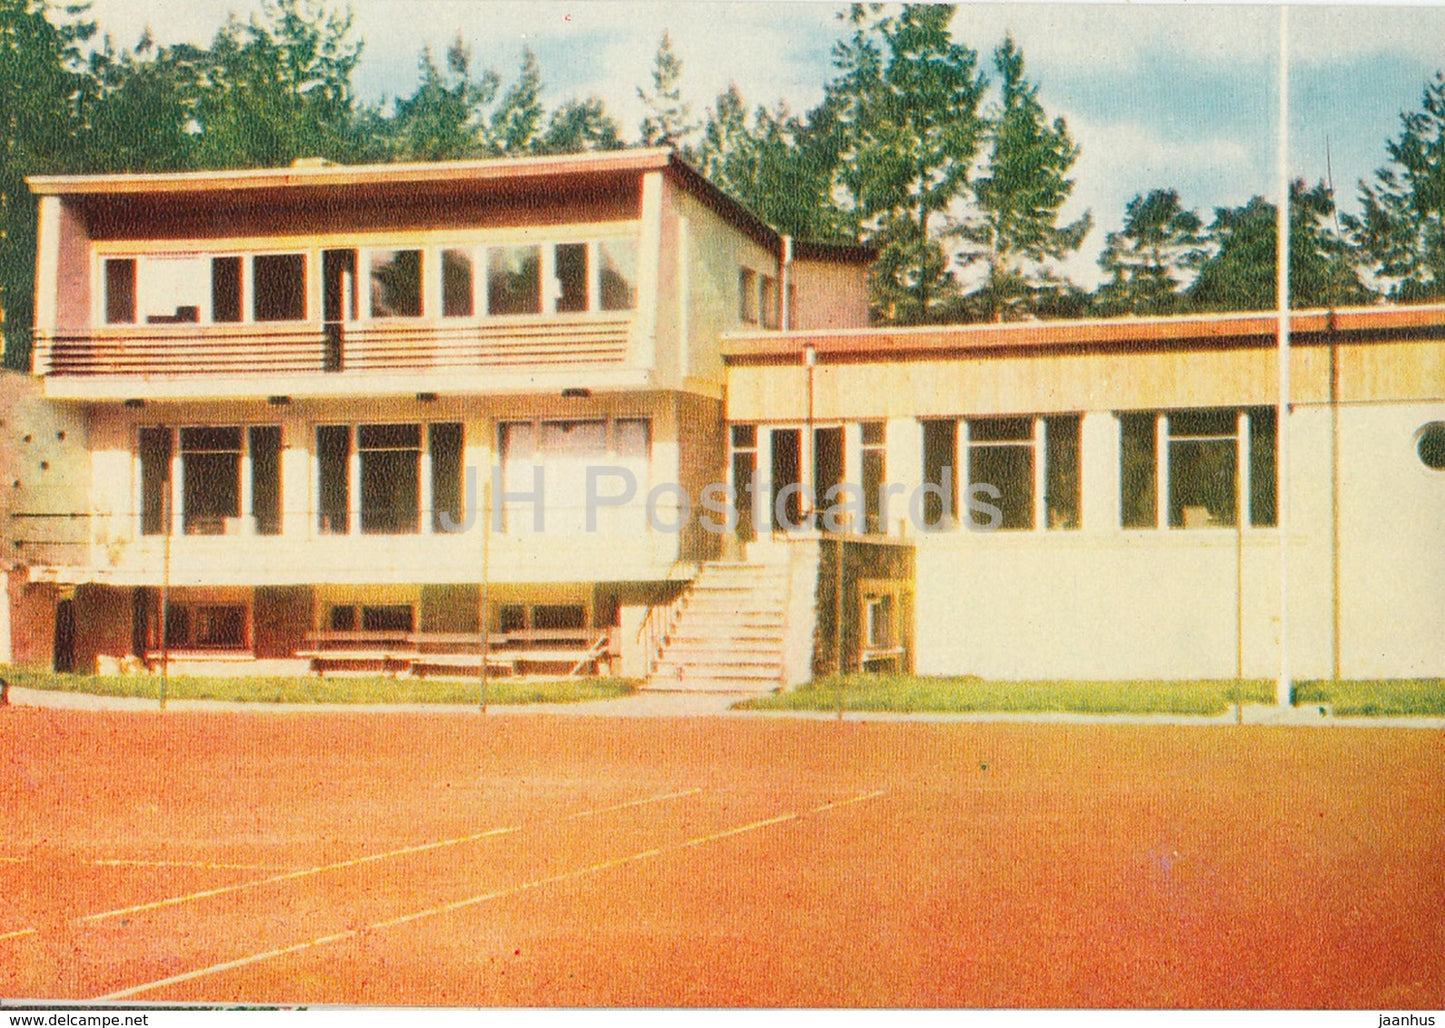 Tennis Sports Centre in Lielupe - Jurmala Views - old postcard - Latvia USSR - unused - JH Postcards